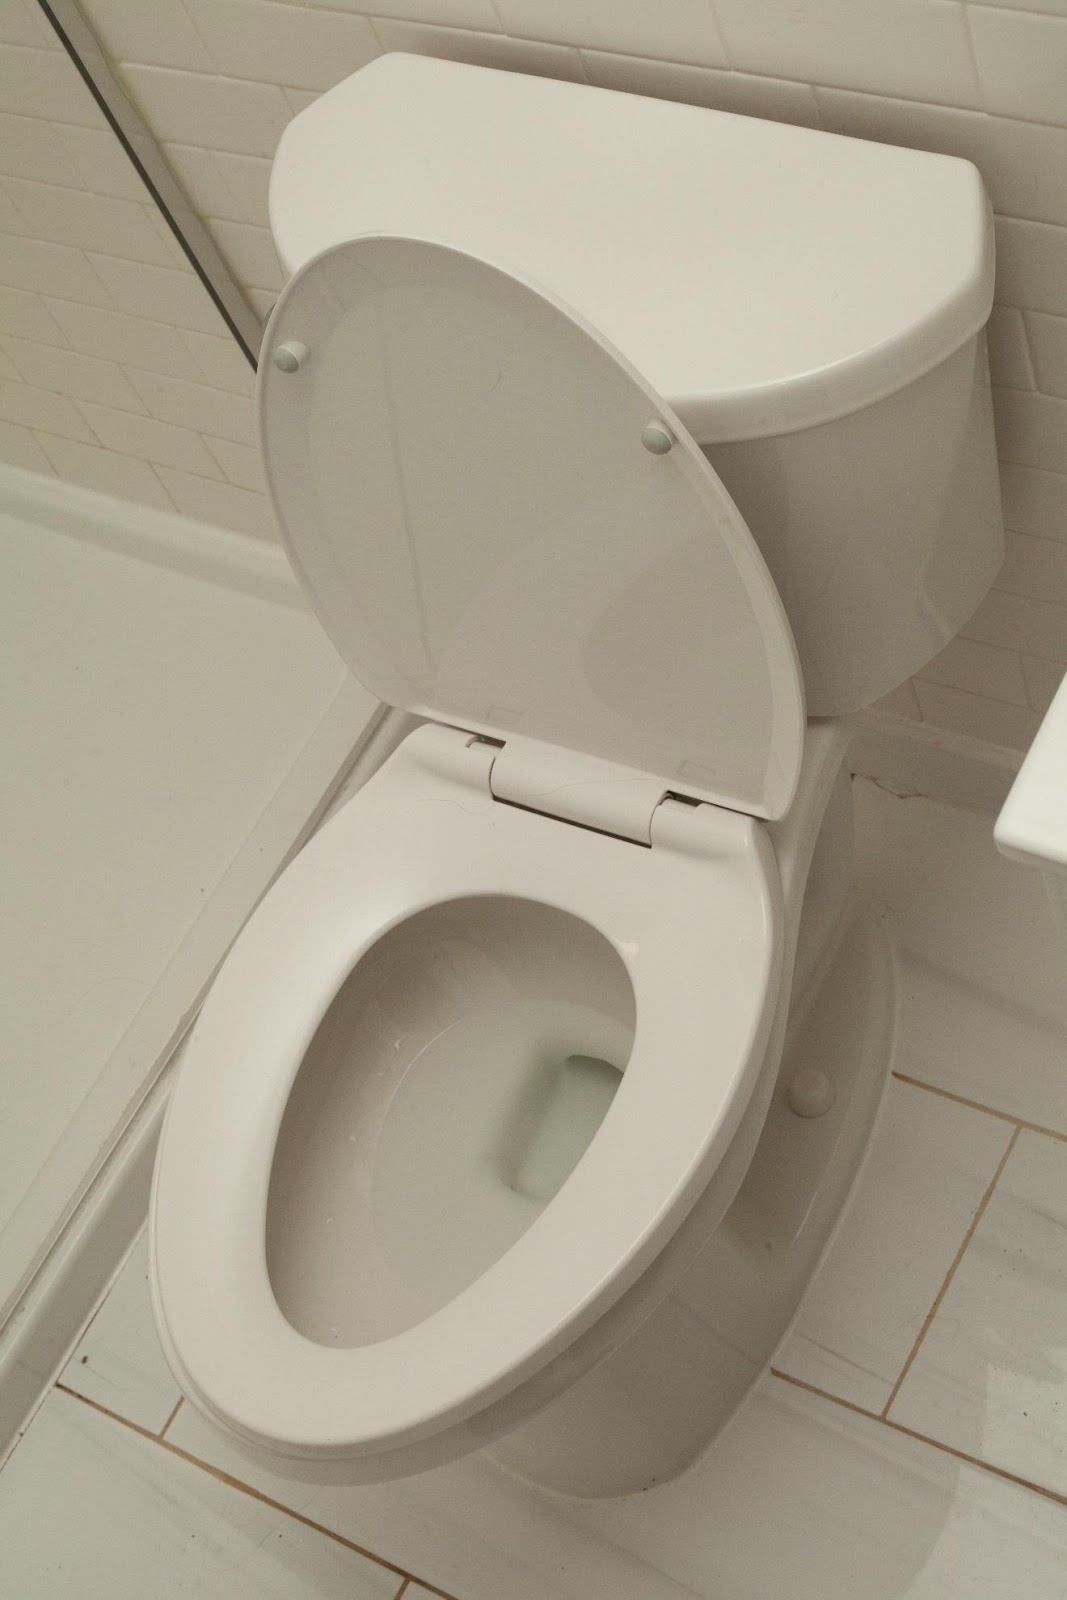 Toilet plumbing hookup